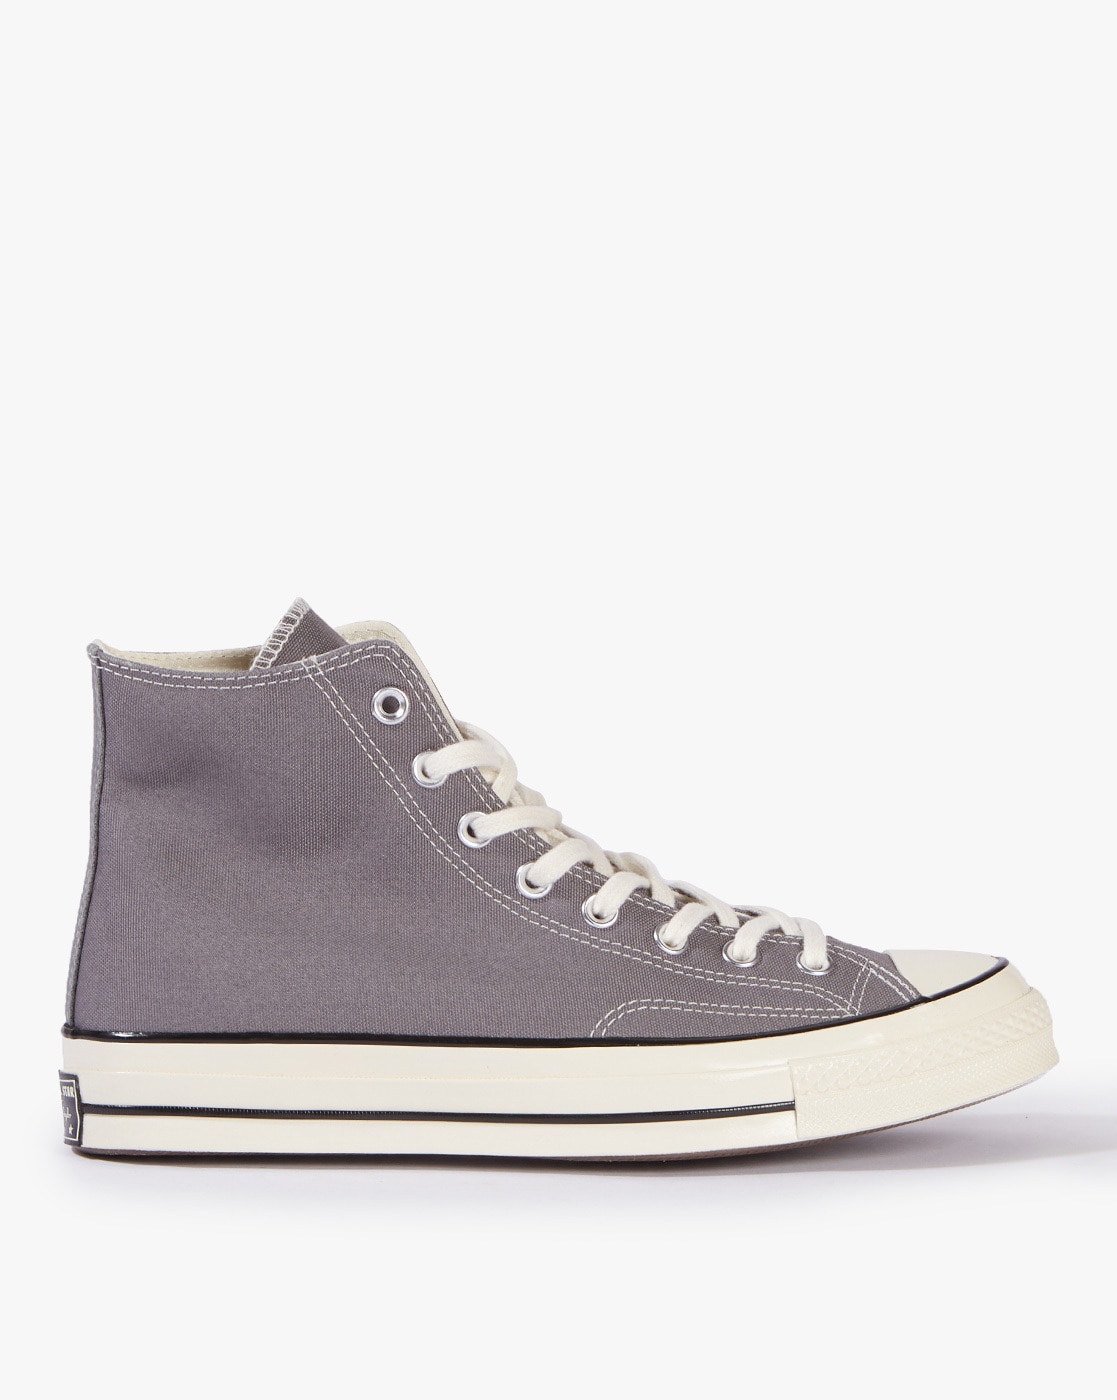 mens gray converse shoes